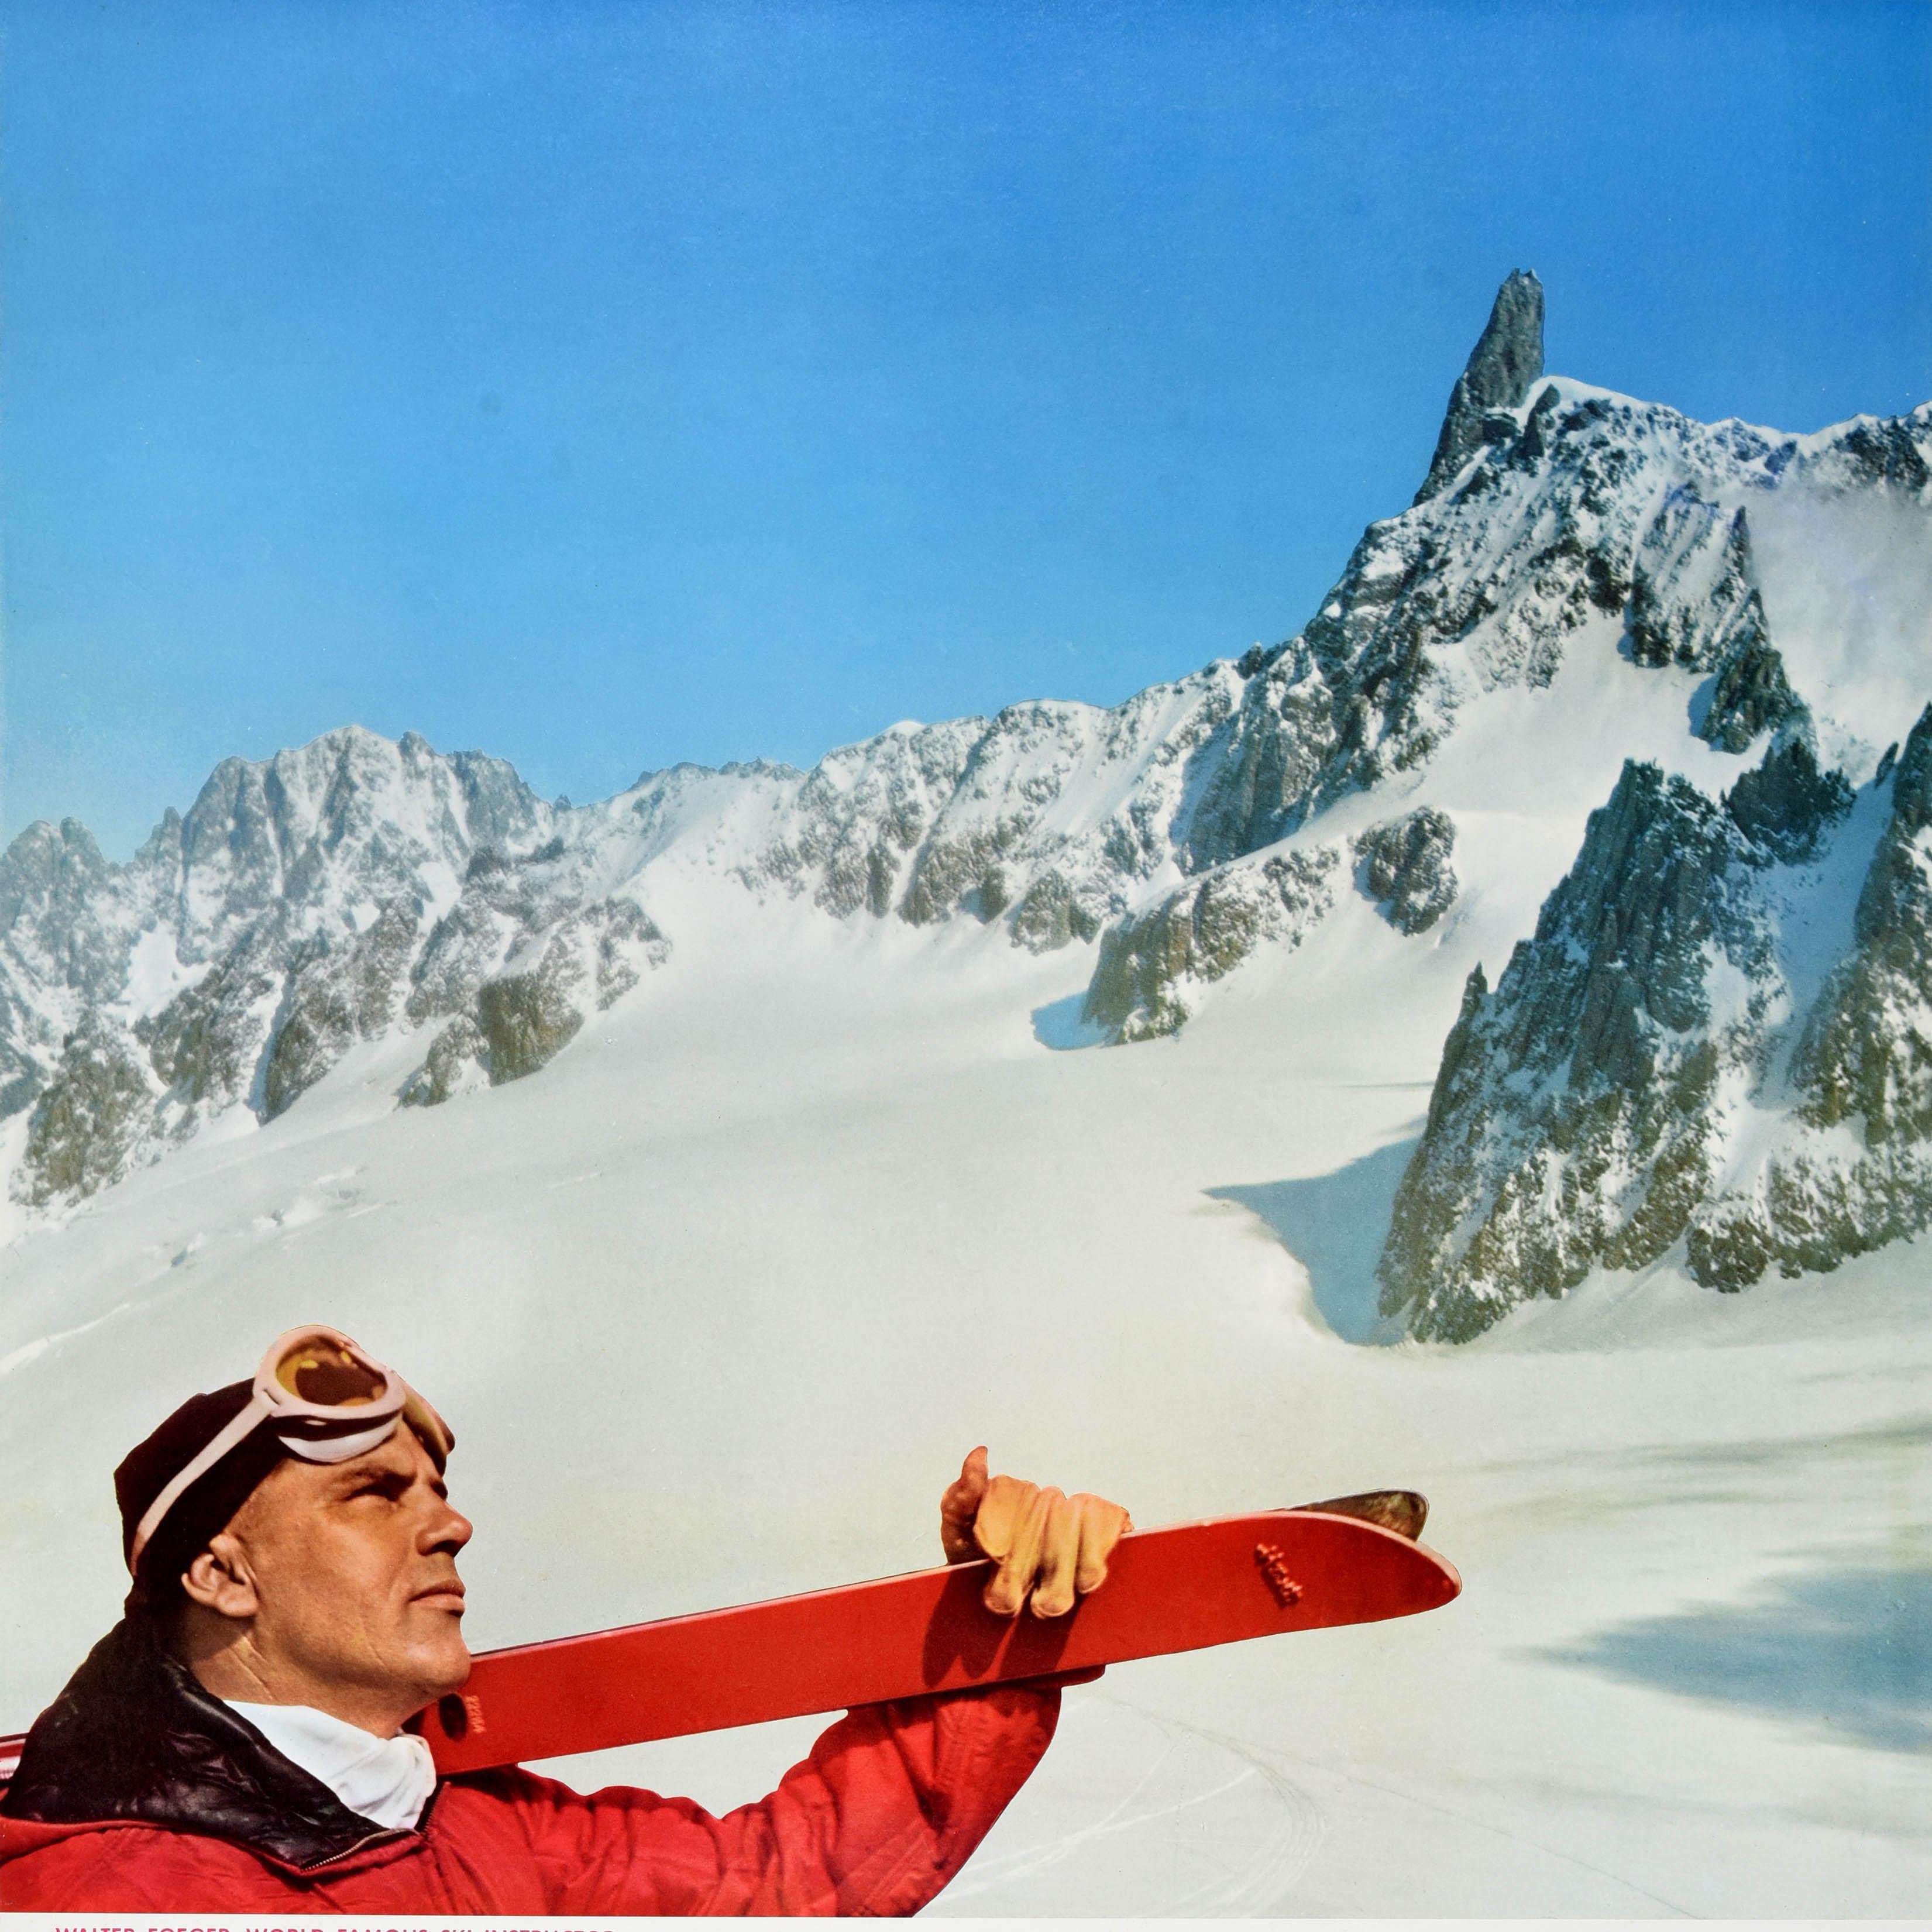 Italian Original Vintage Skiing Travel Poster Ski Italy Alitalia Airlines Walter Foeger For Sale